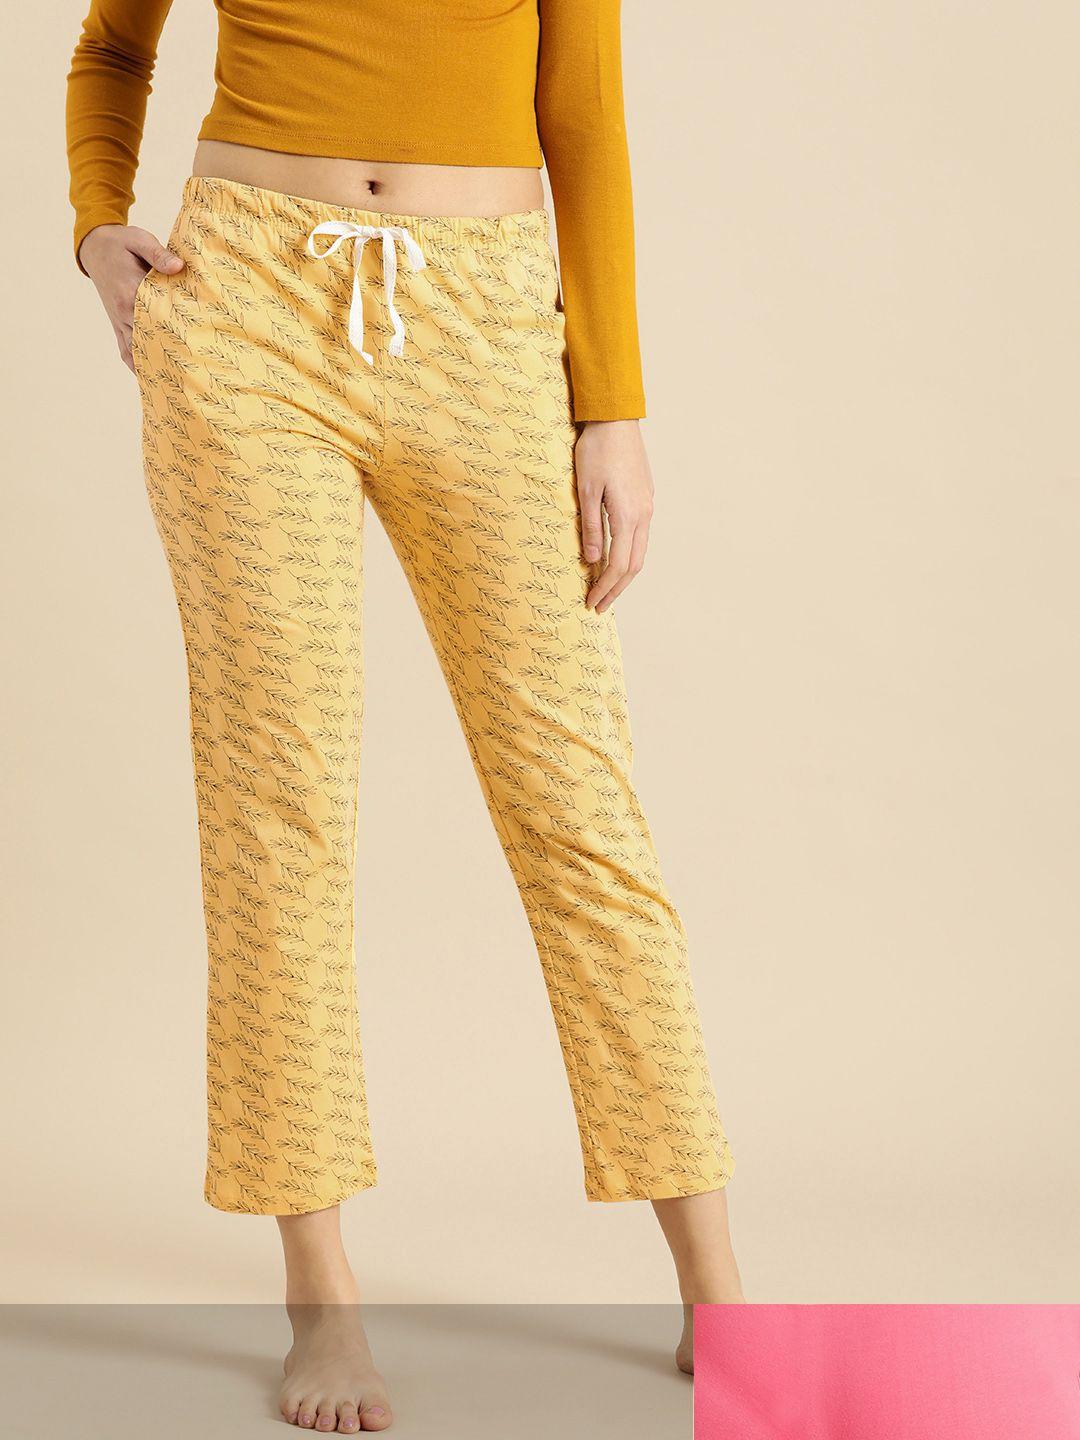 dreamz by pantaloons women pack of 2 yellow & pink printed lounge pants